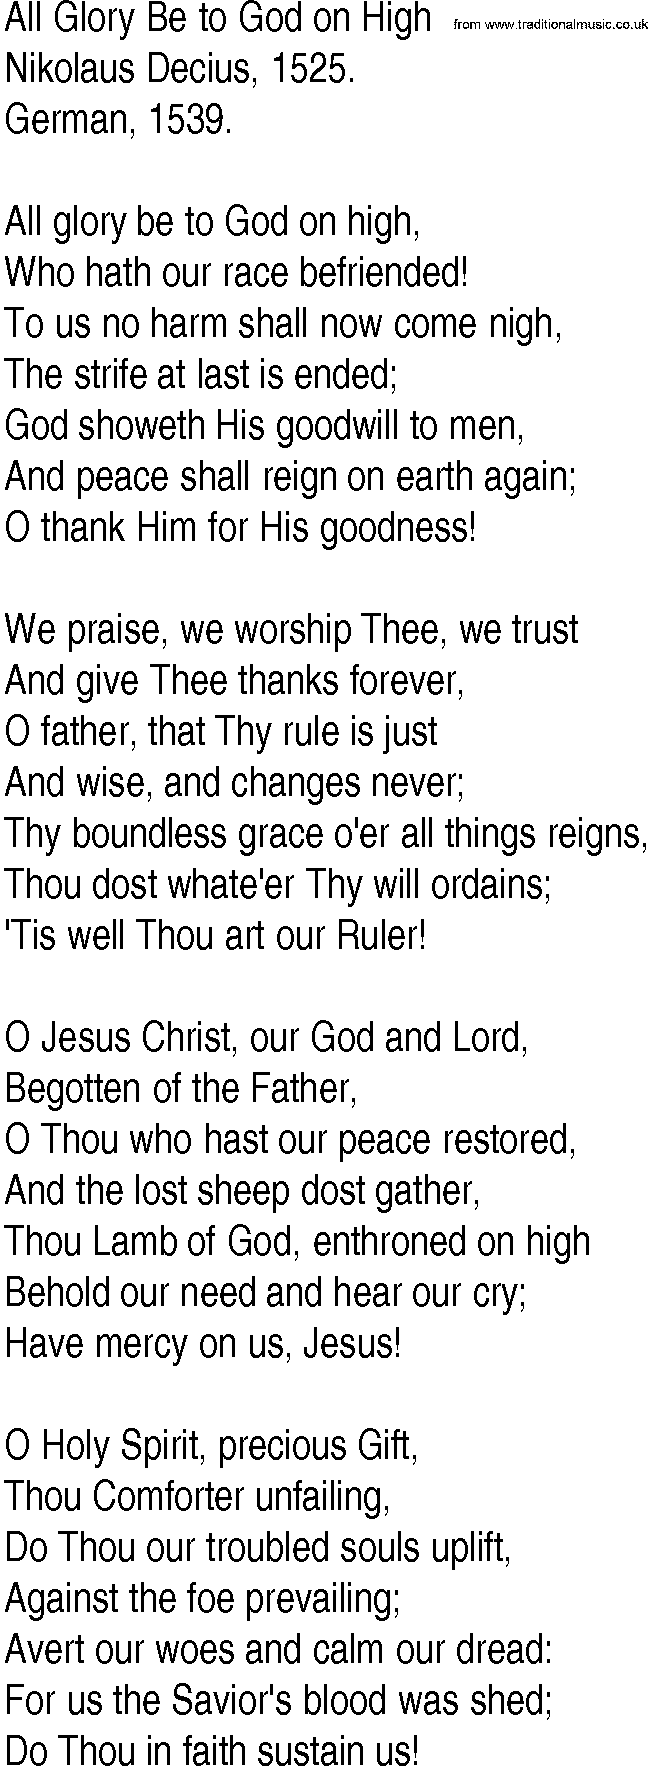 Hymn and Gospel Song: All Glory Be to God on High by Nikolaus Decius lyrics